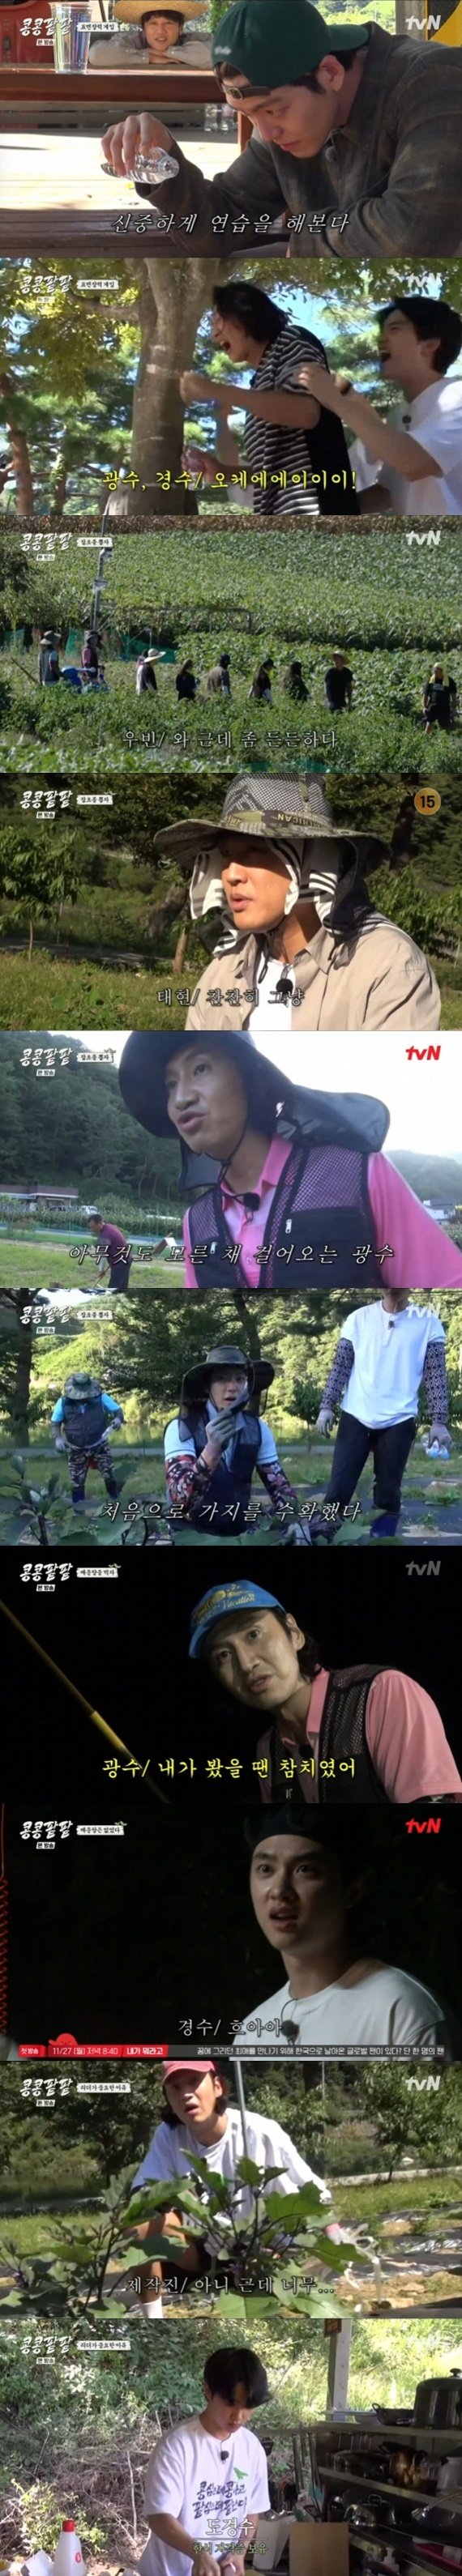 tvN '콩콩팥팥' 캡처